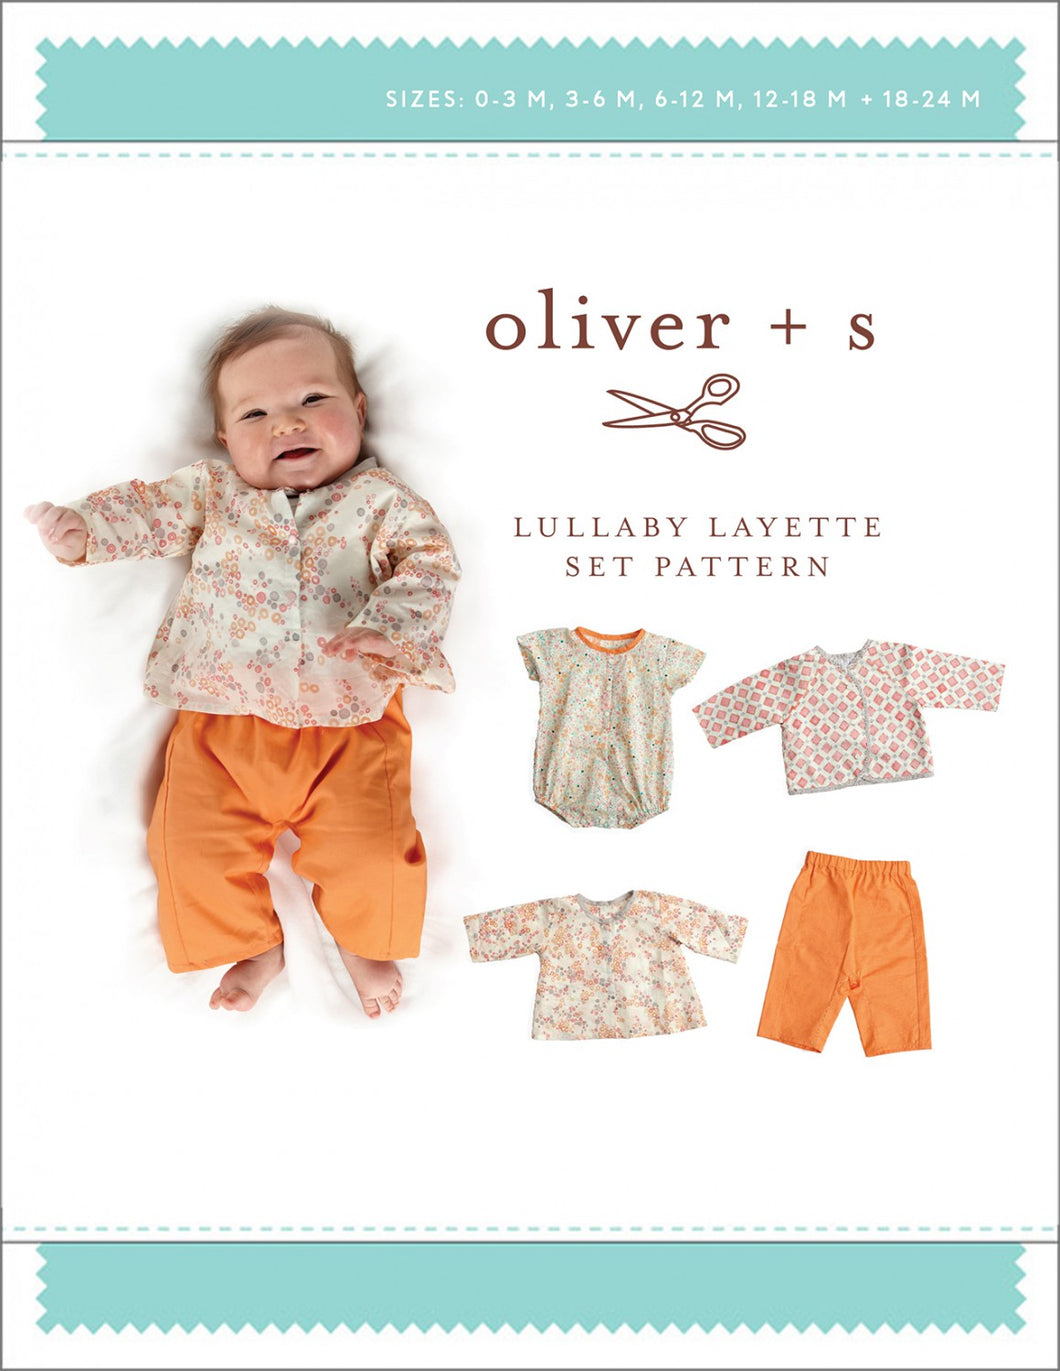 Lullaby Layette Set Sewing Pattern